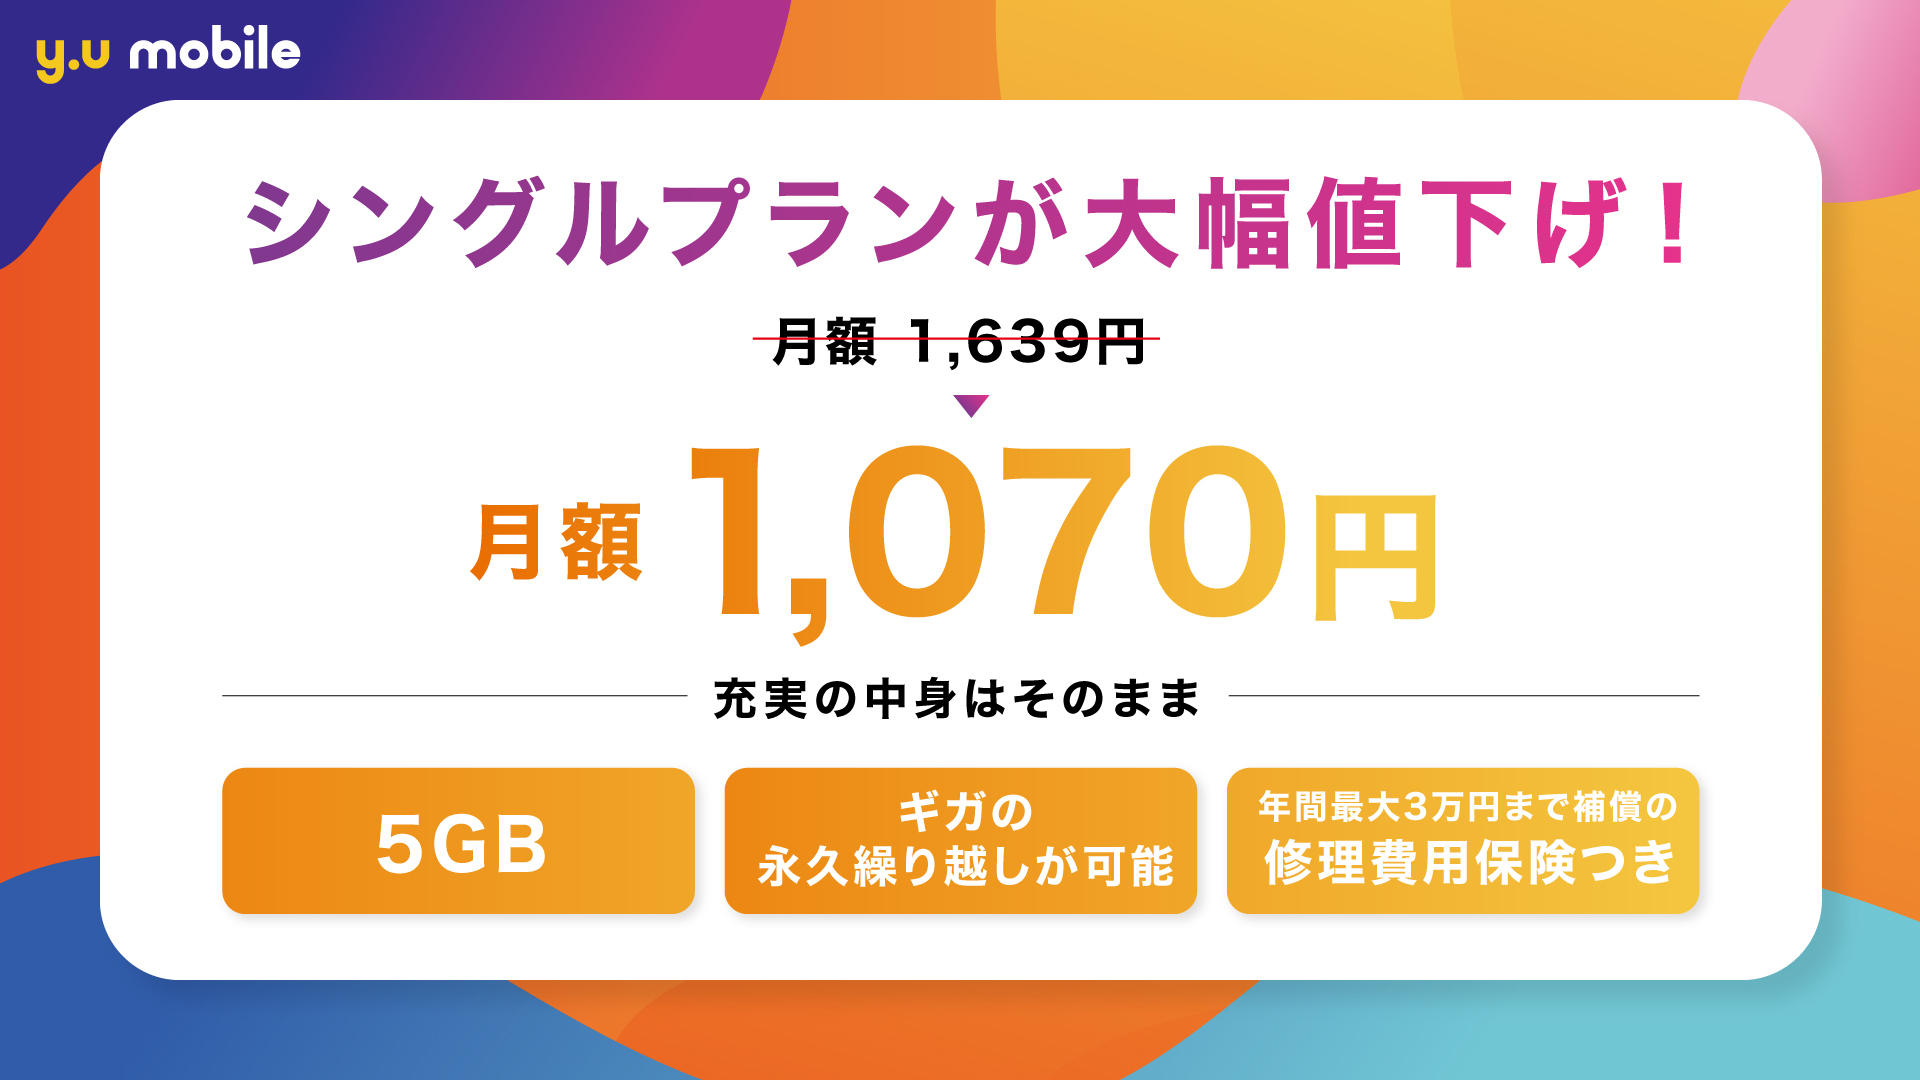 y.u mobile』 シングルプランを月額1,070円に値下げ - お知らせ | y.u